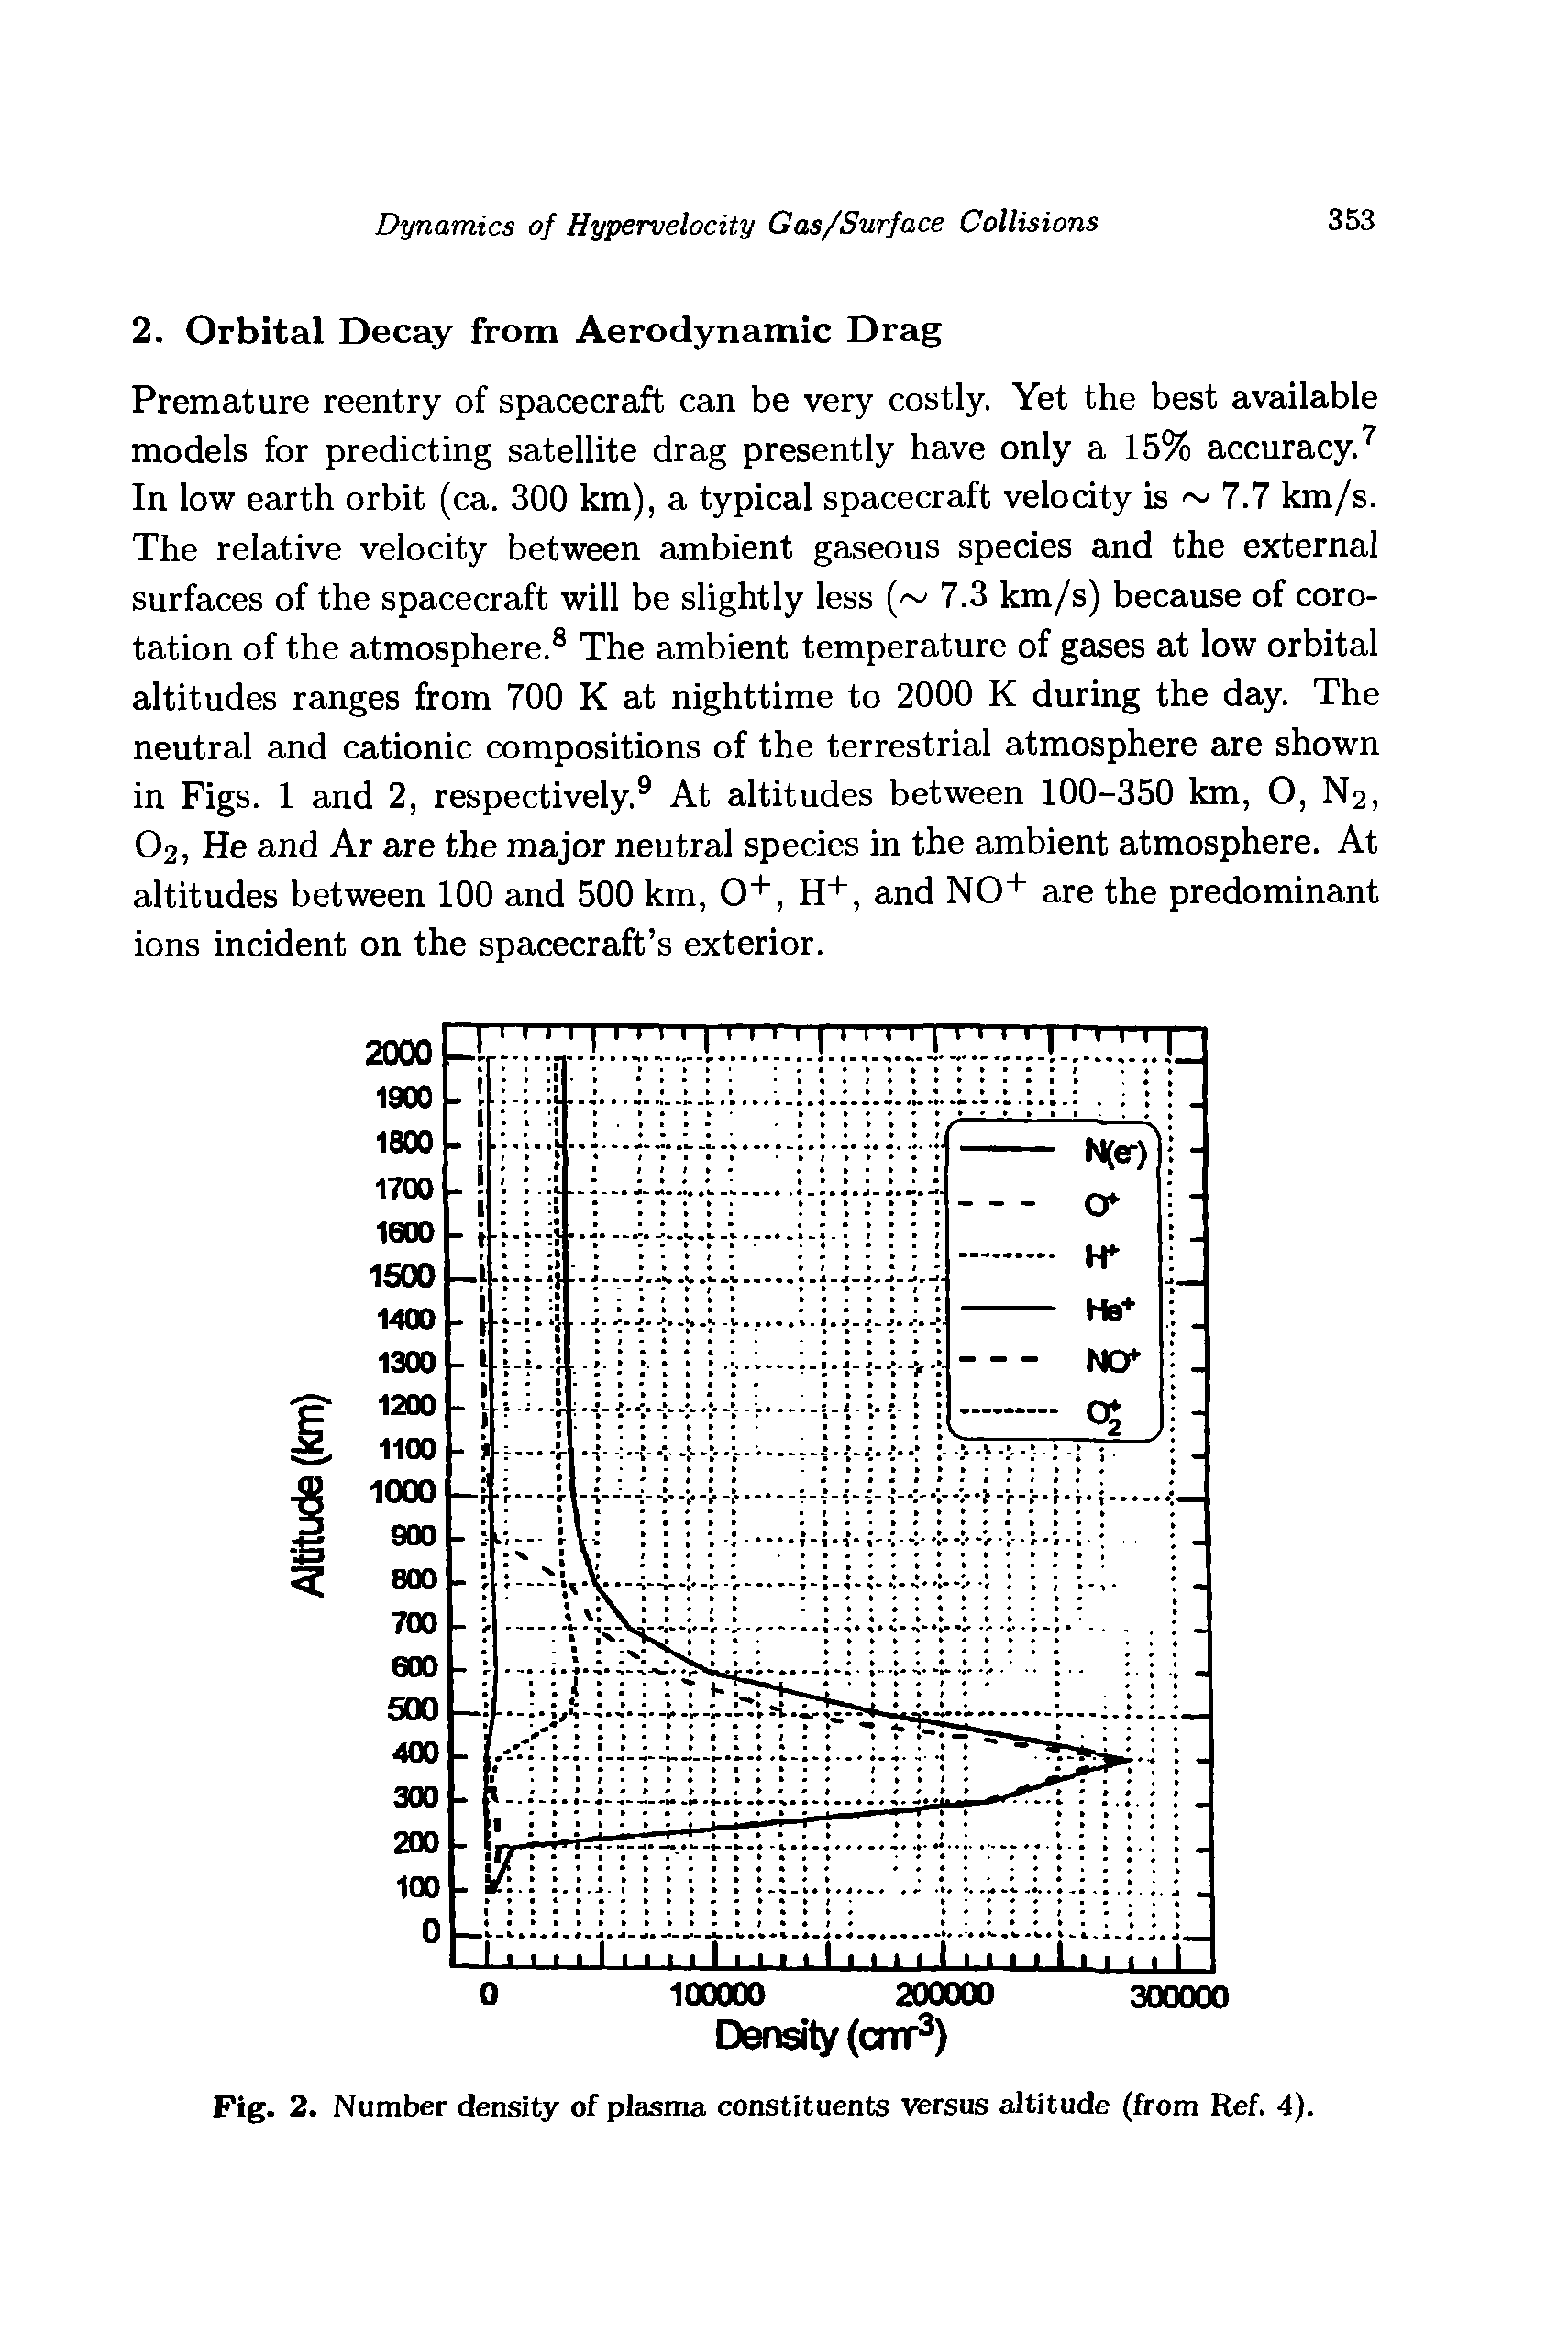 Fig. 2. Number density of plasma constituents versus altitude (from Ref. 4).